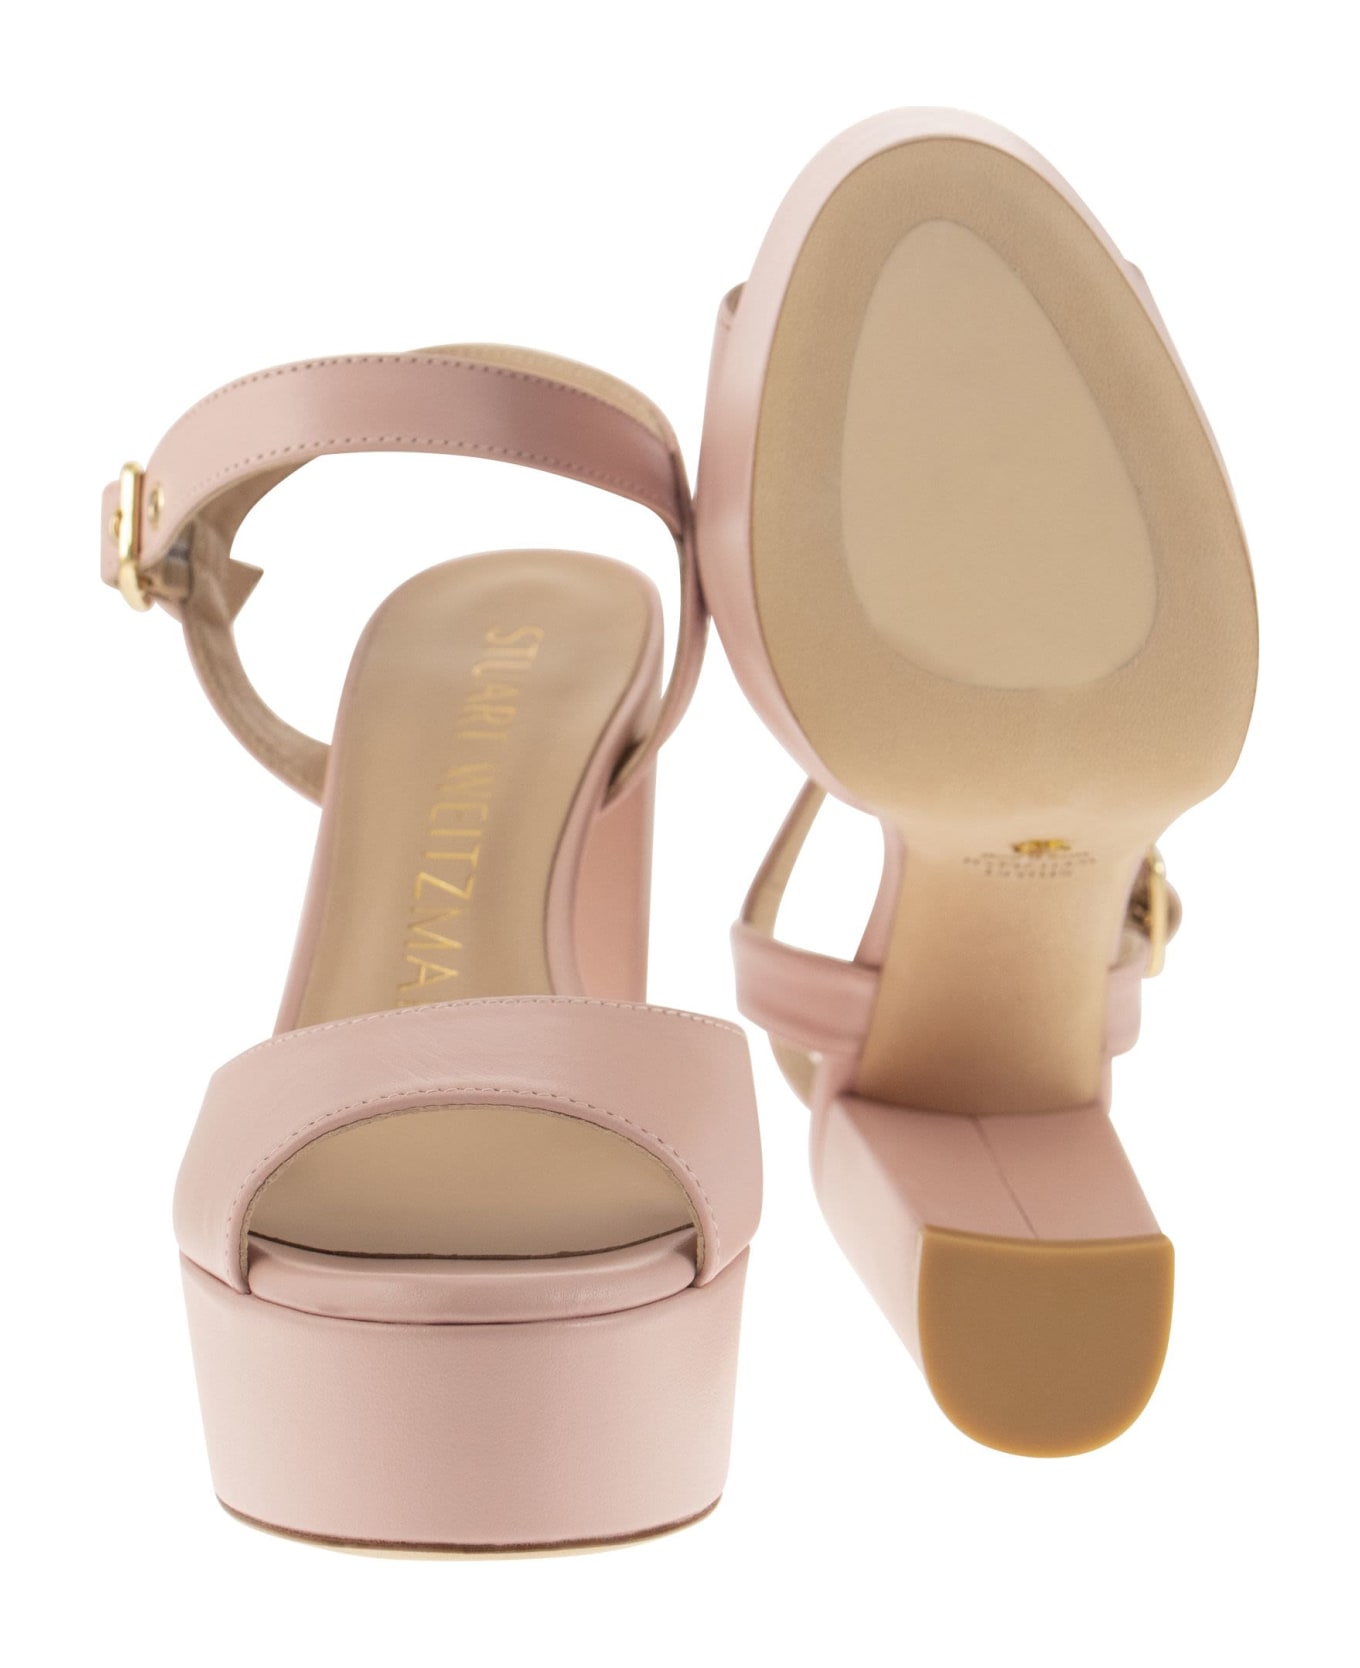 Stuart Weitzman Ryder - Leather Platform Sandals - Light Pink サンダル